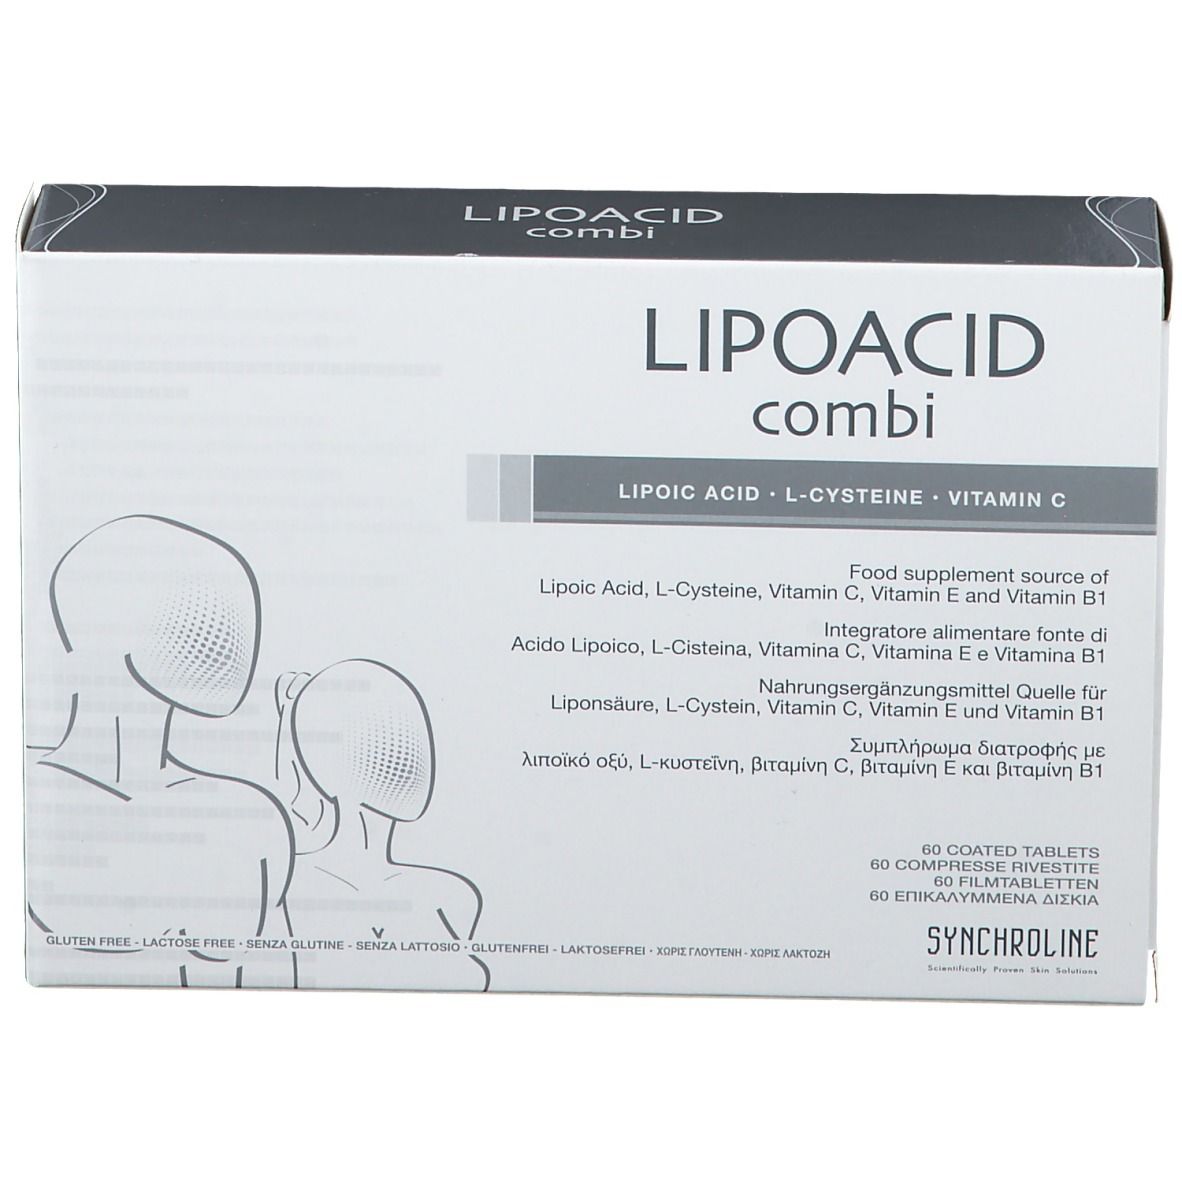 Synchroline LIPOACID Combi